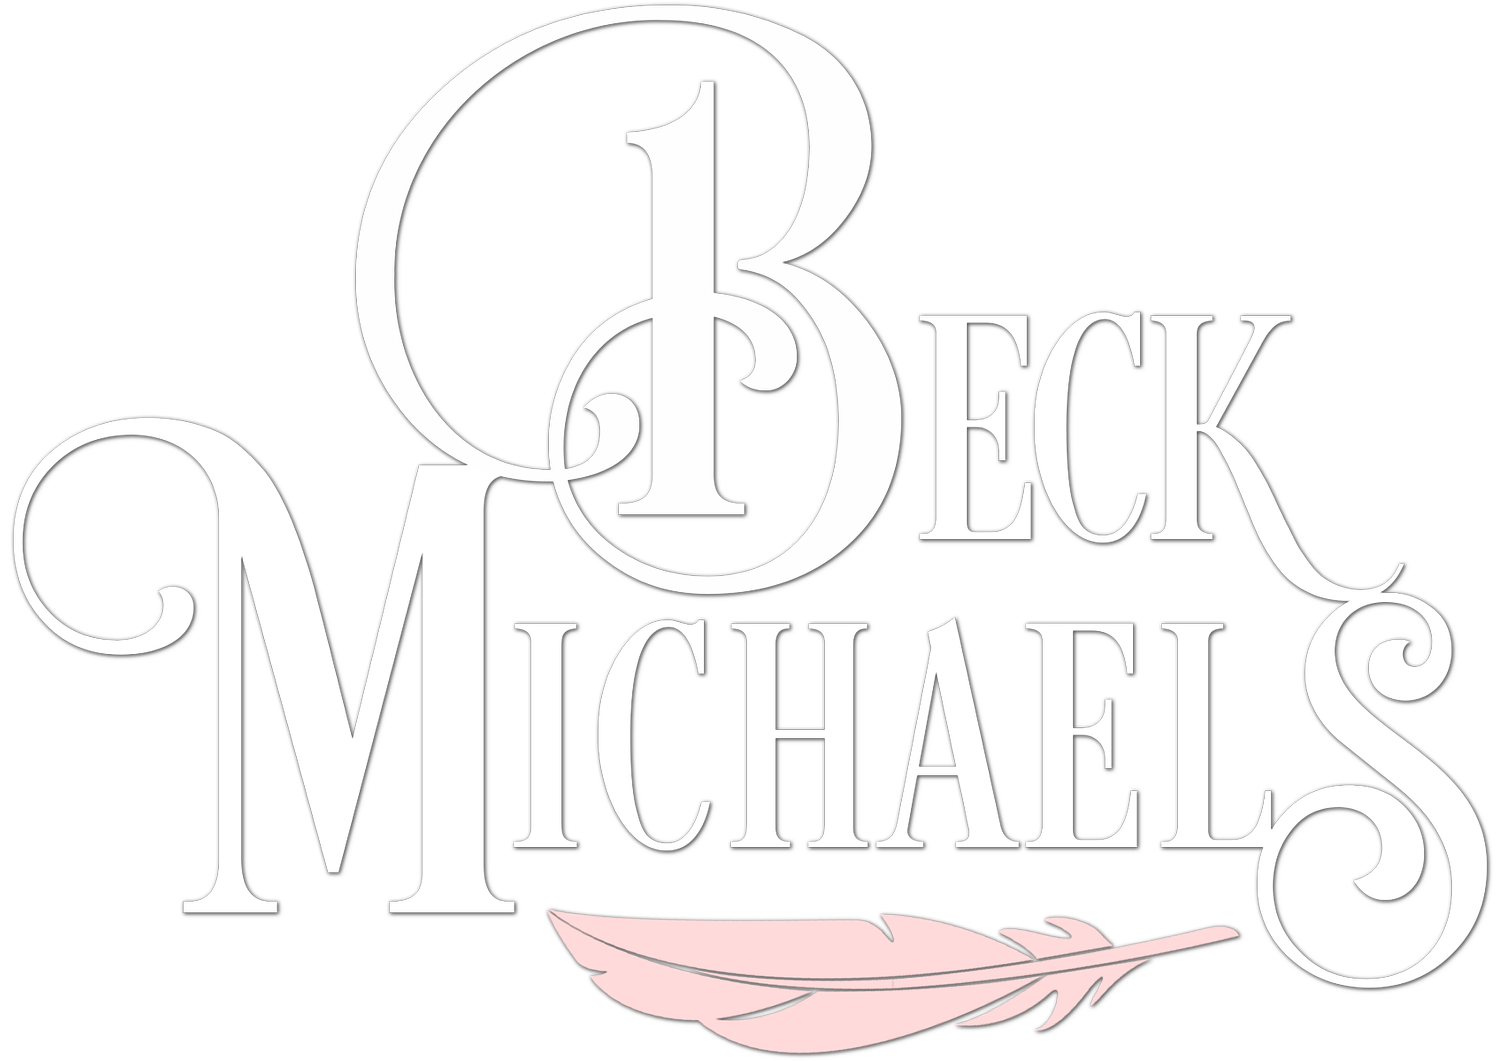 Beck Michaels